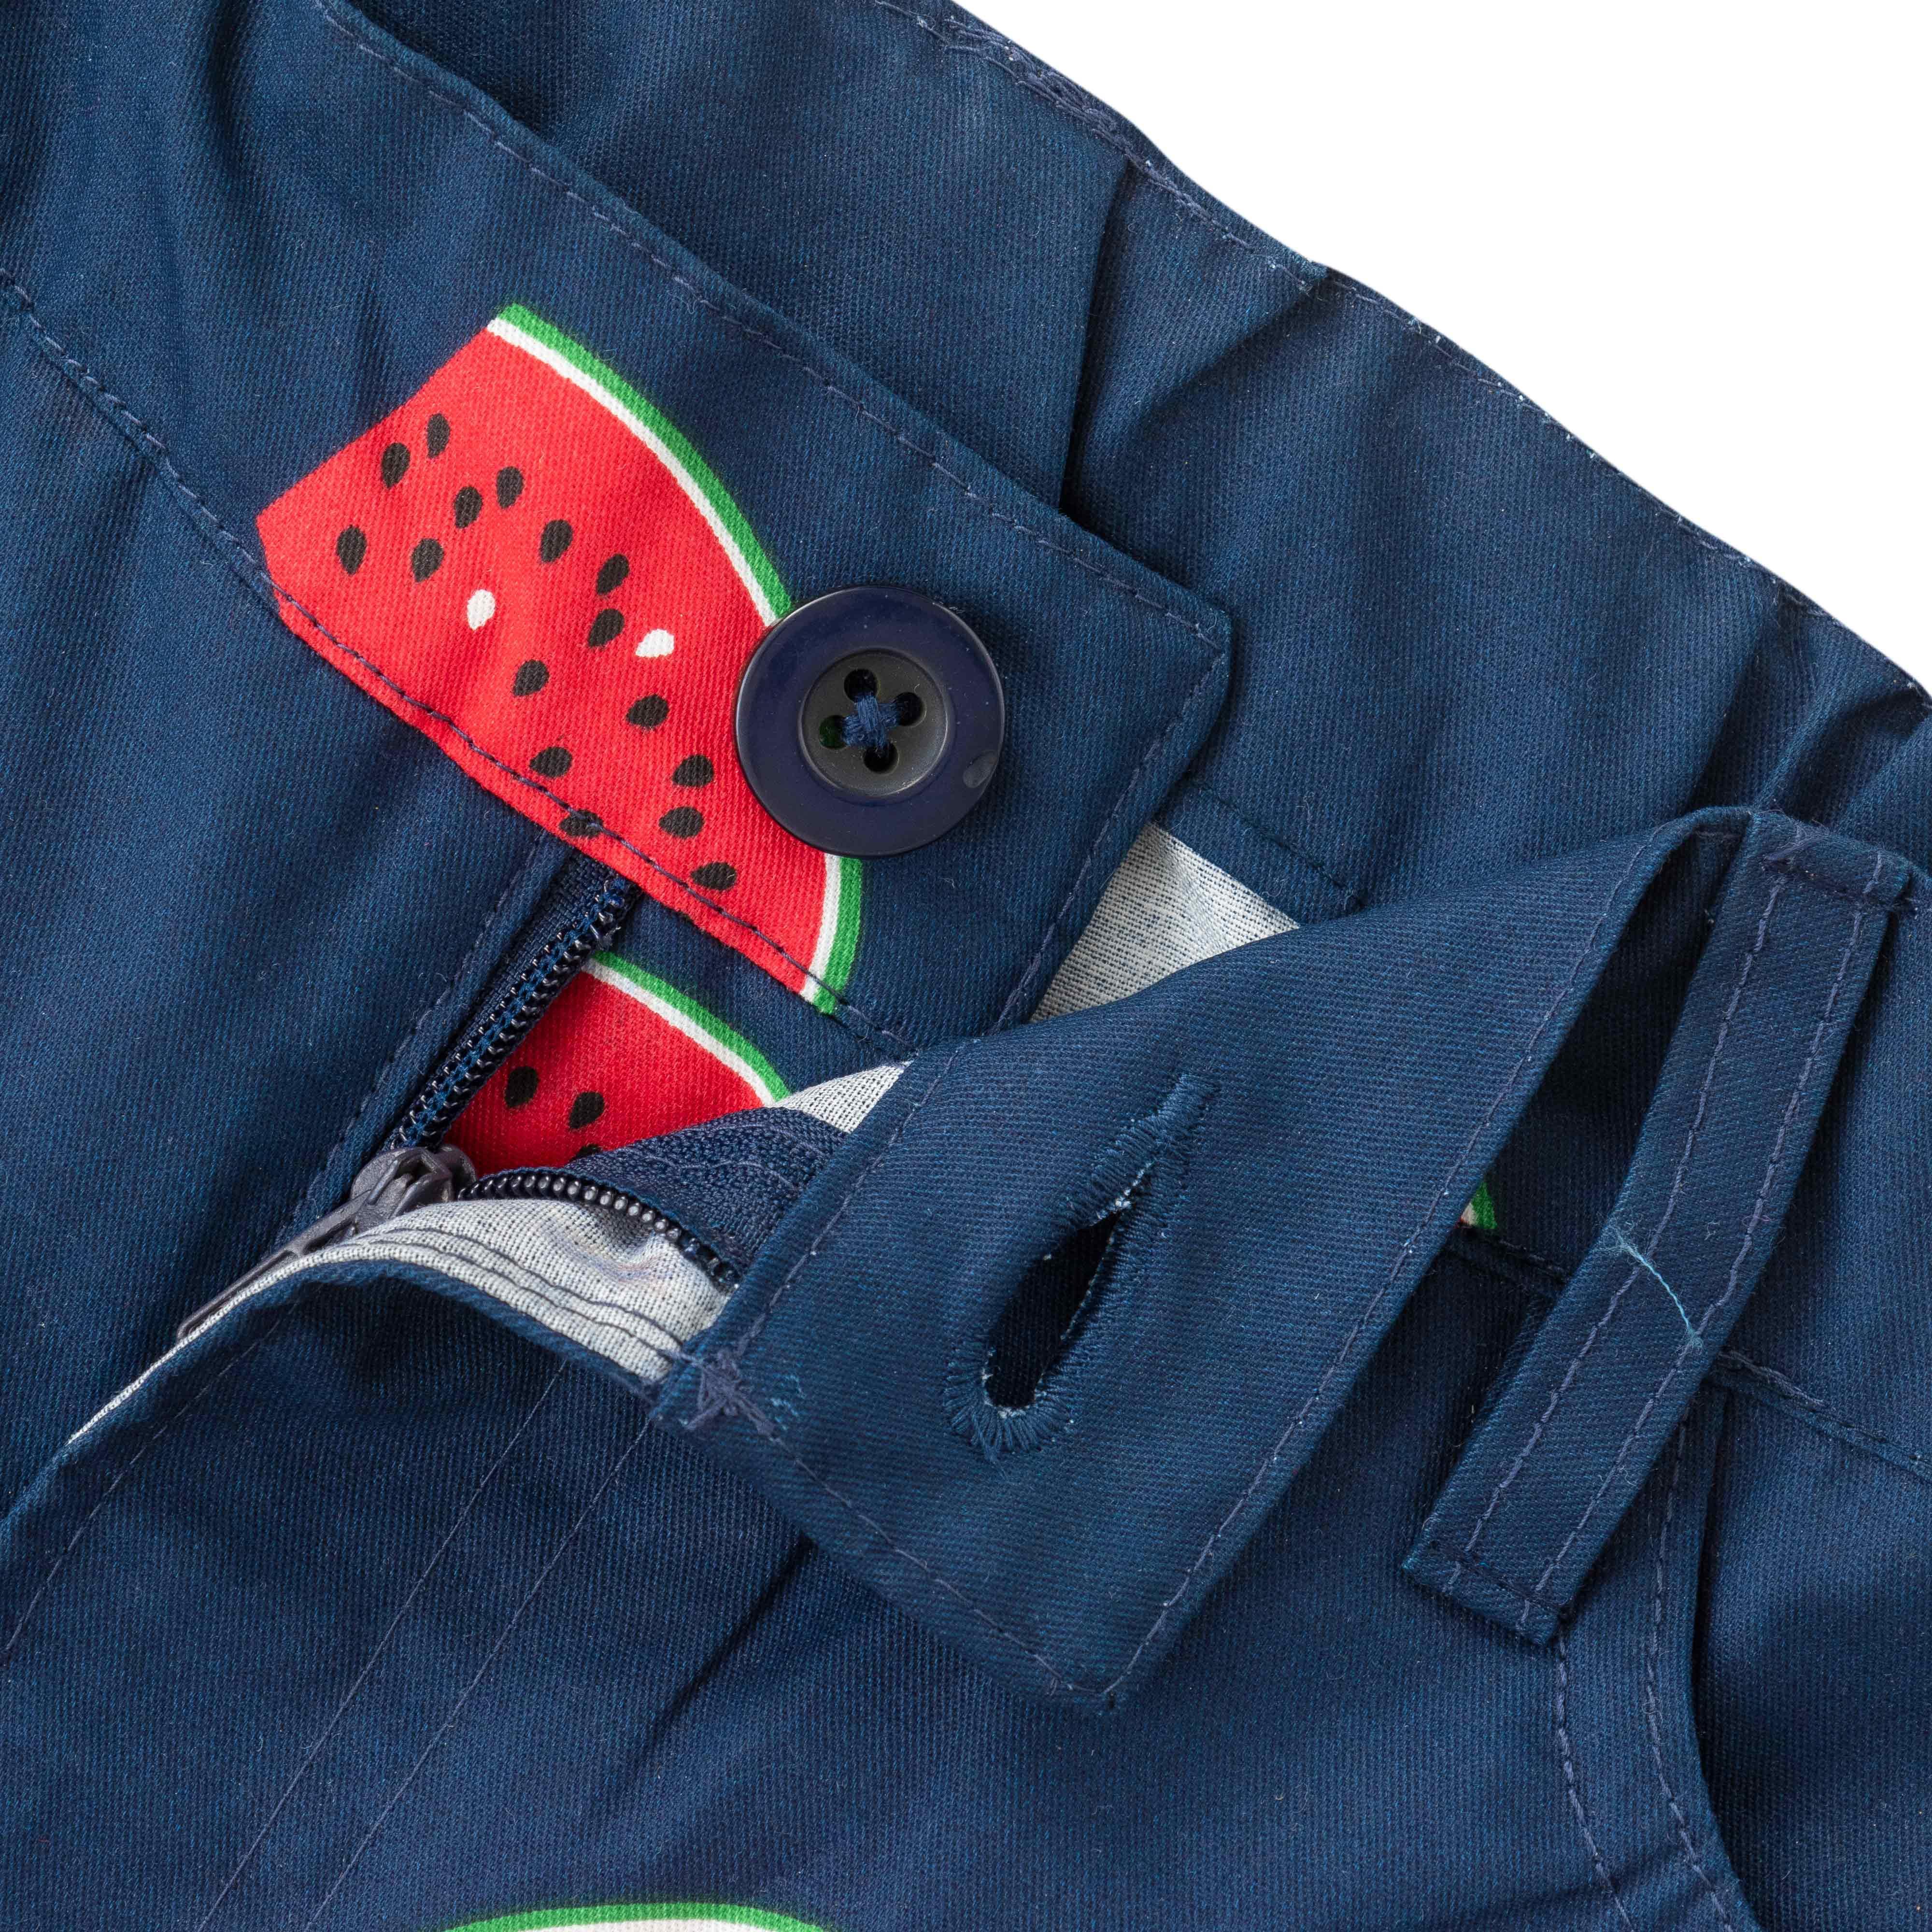 Girls Jersey Toddlers Watermelon Printed Shorts - Dark Blue - Juscubs